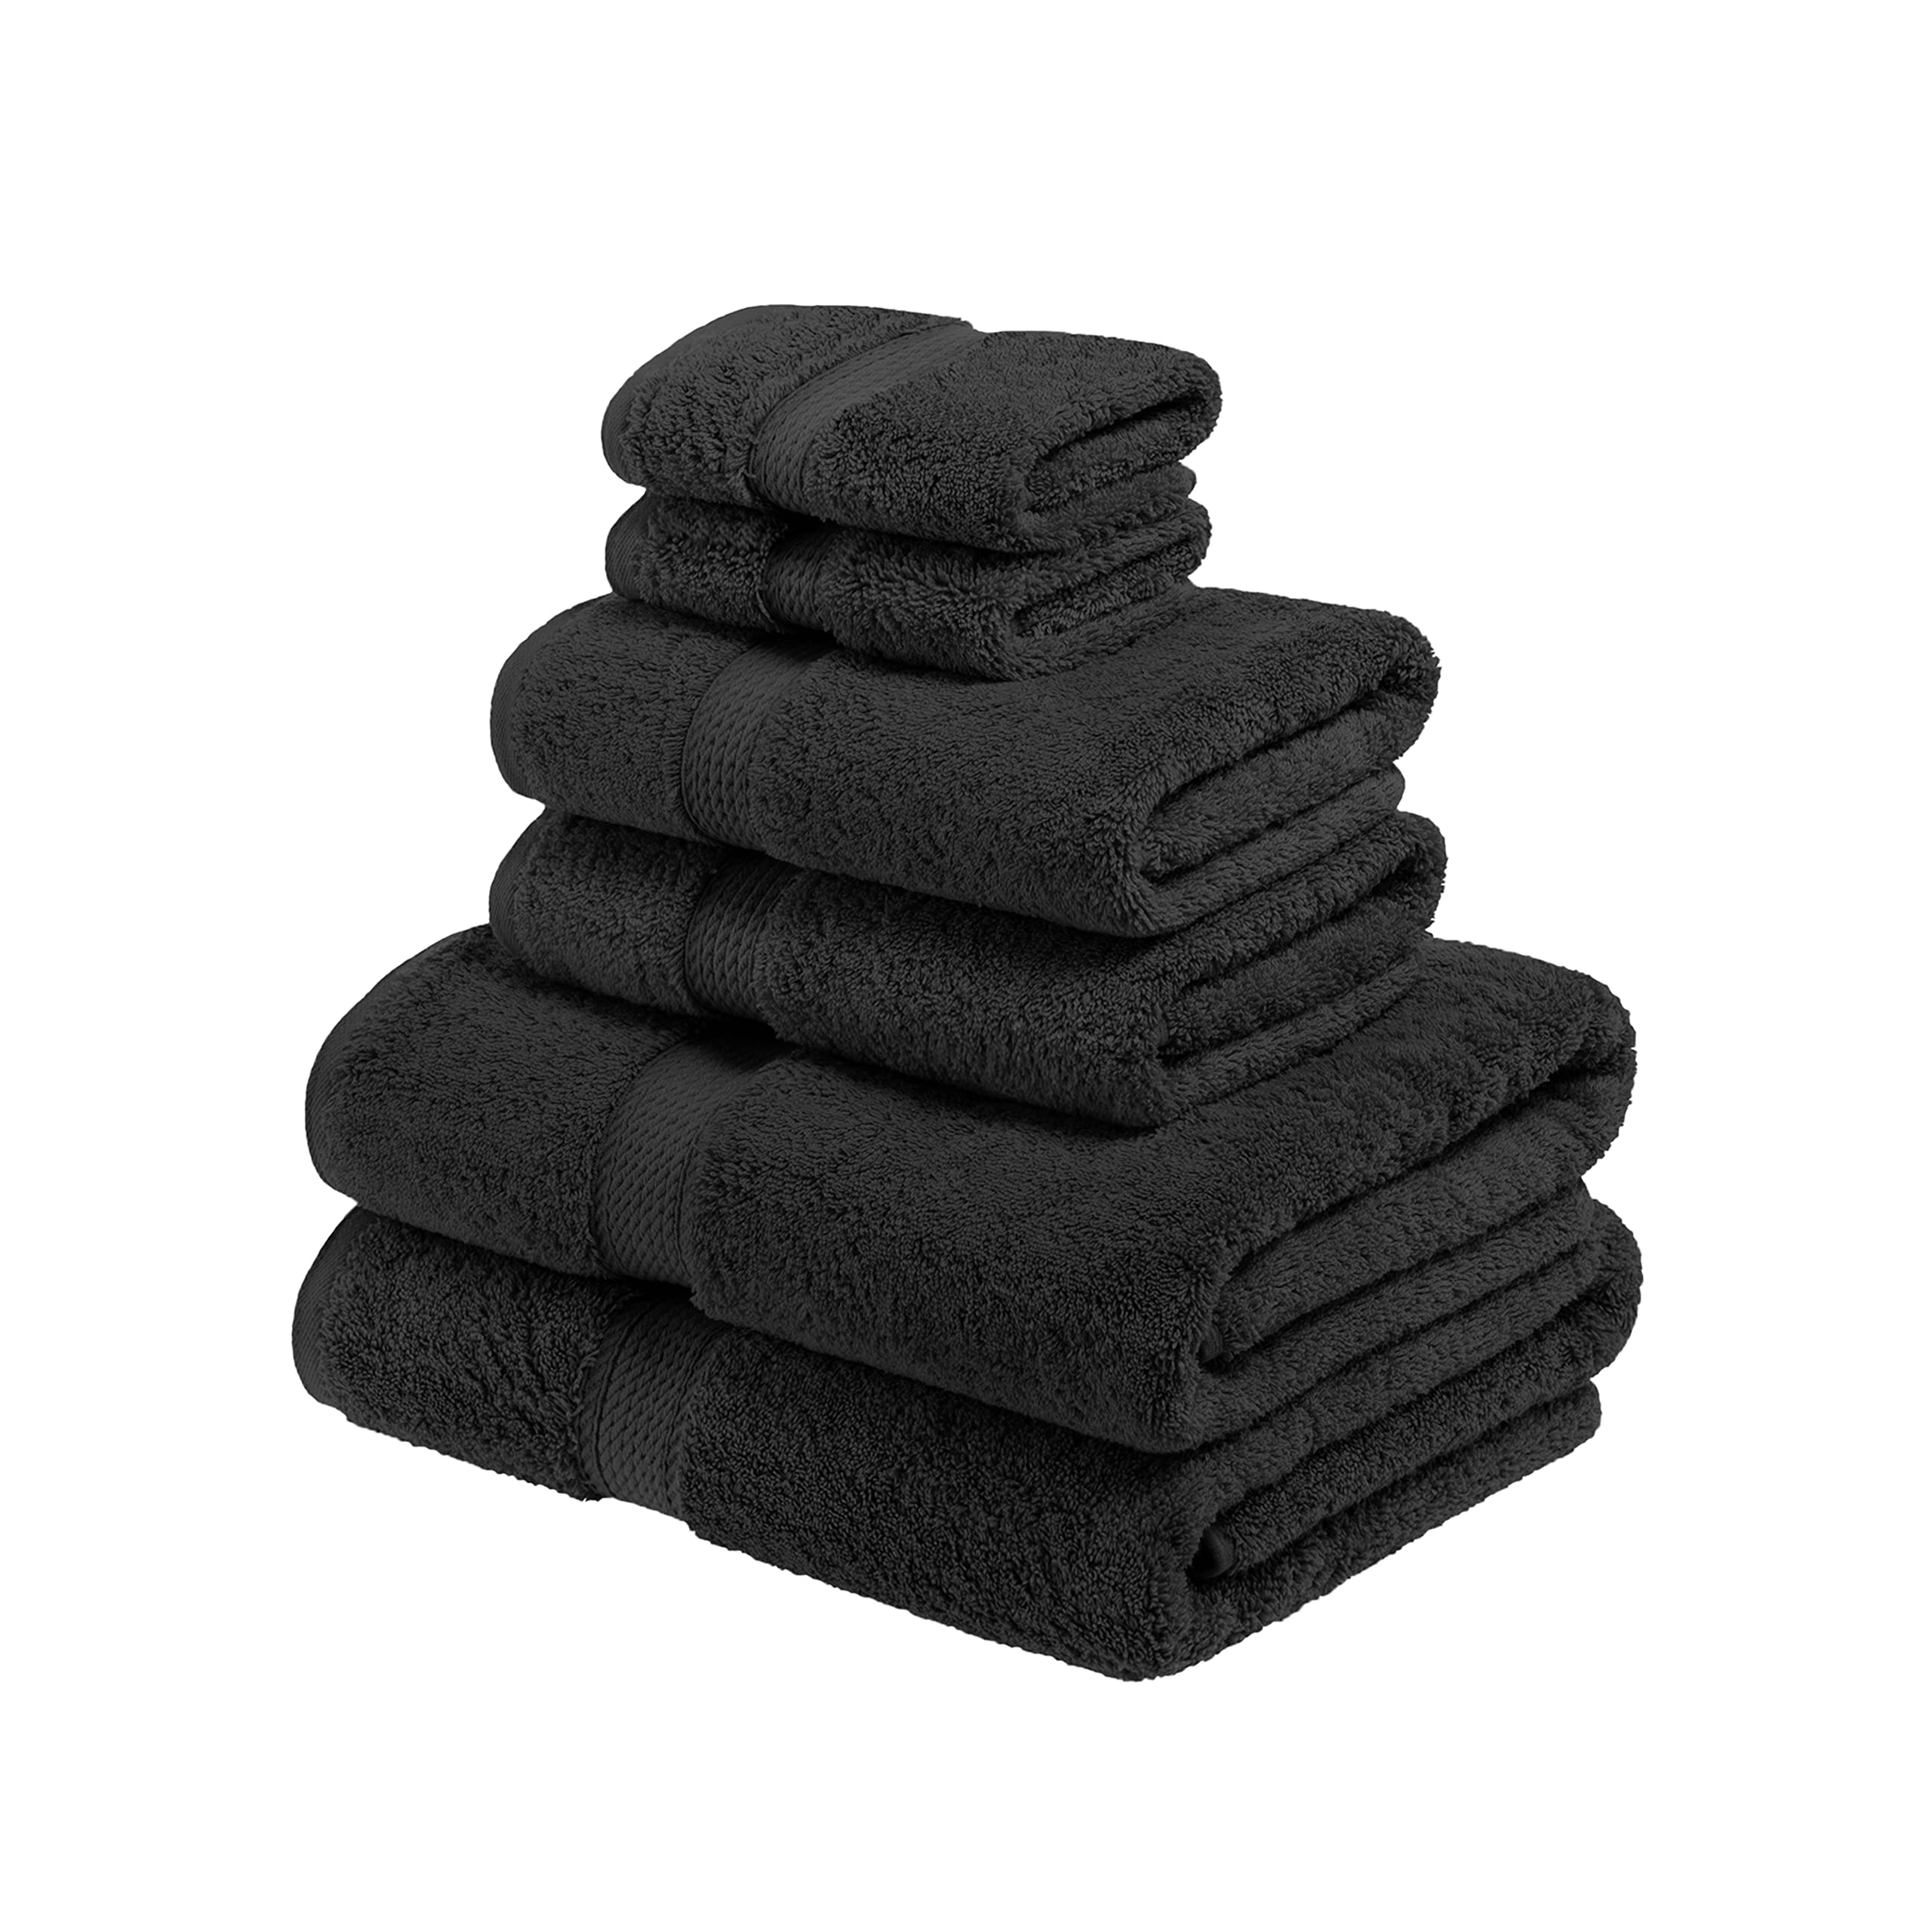 Book Cover SUPERIOR Solid Egyptian Cotton Towel Set, Washcloths 13” x 13”, Hand Towels 20” x 30”, Bath Towels 30” x 55”, Black, 6-Pieces Black 6-Piece Towel Set